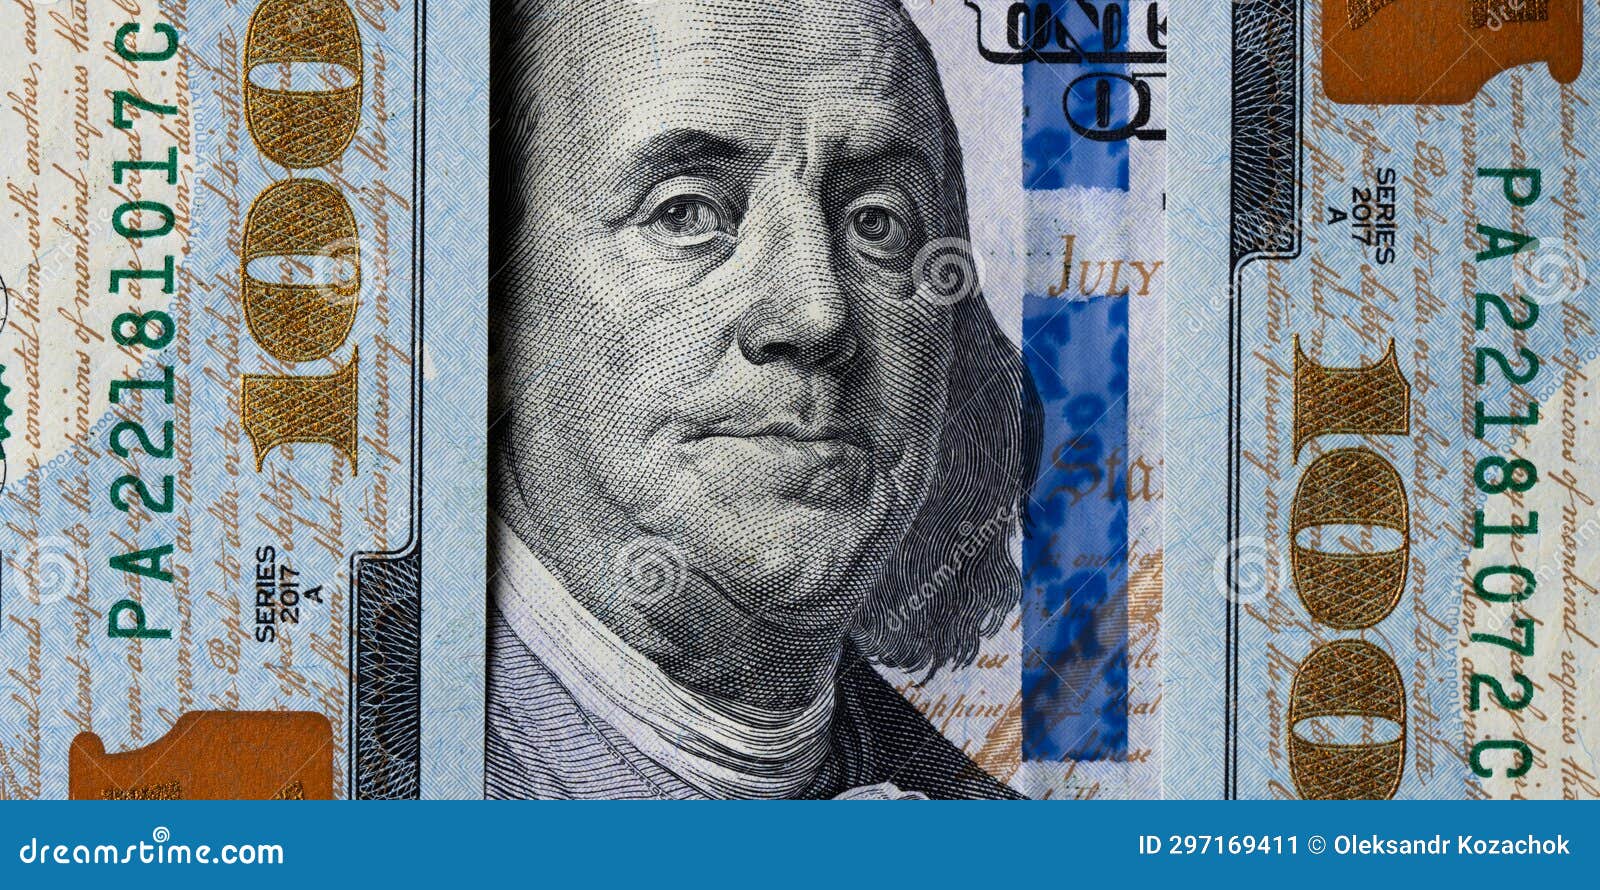 Closeup Portrait Benjamin Franklin on 100 Us Dollar Bill. Stock Image ...